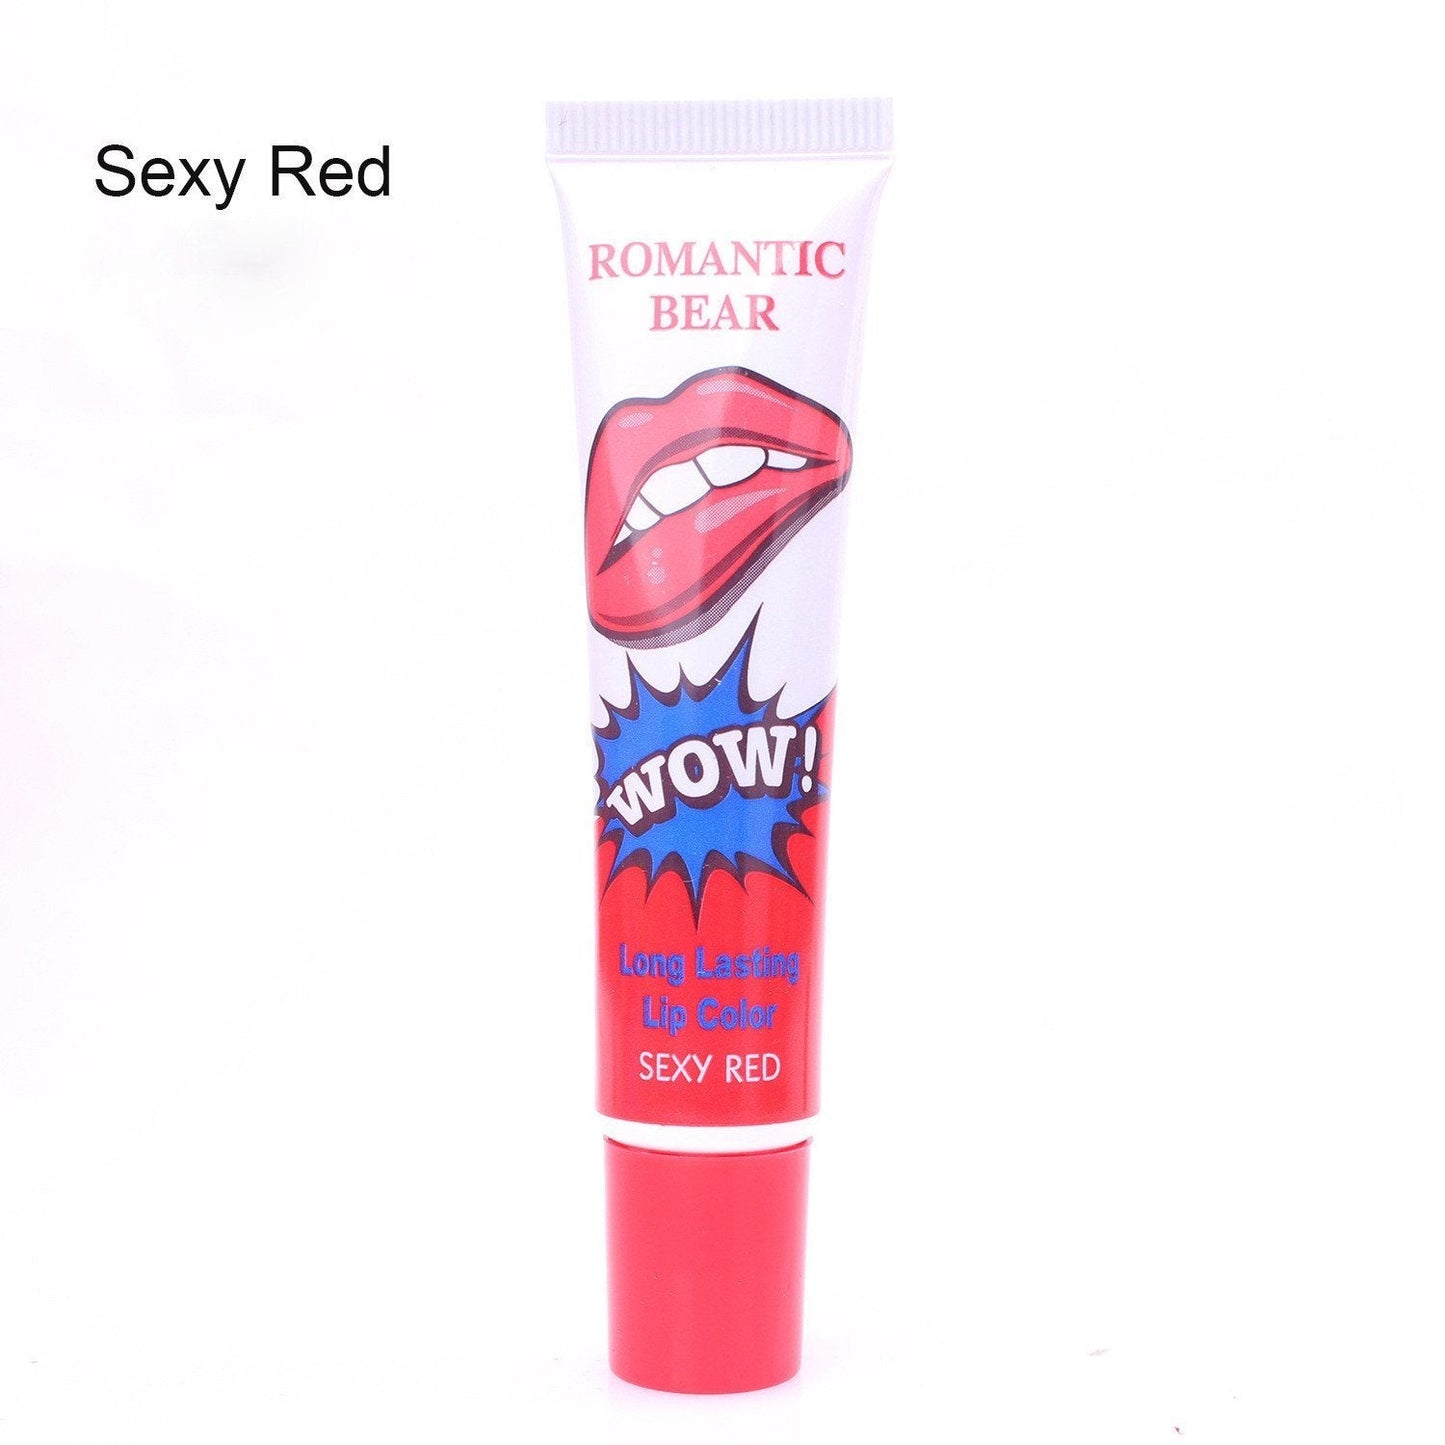 Premium Tinted Lip Stain (Gloss & Peel) by White Market